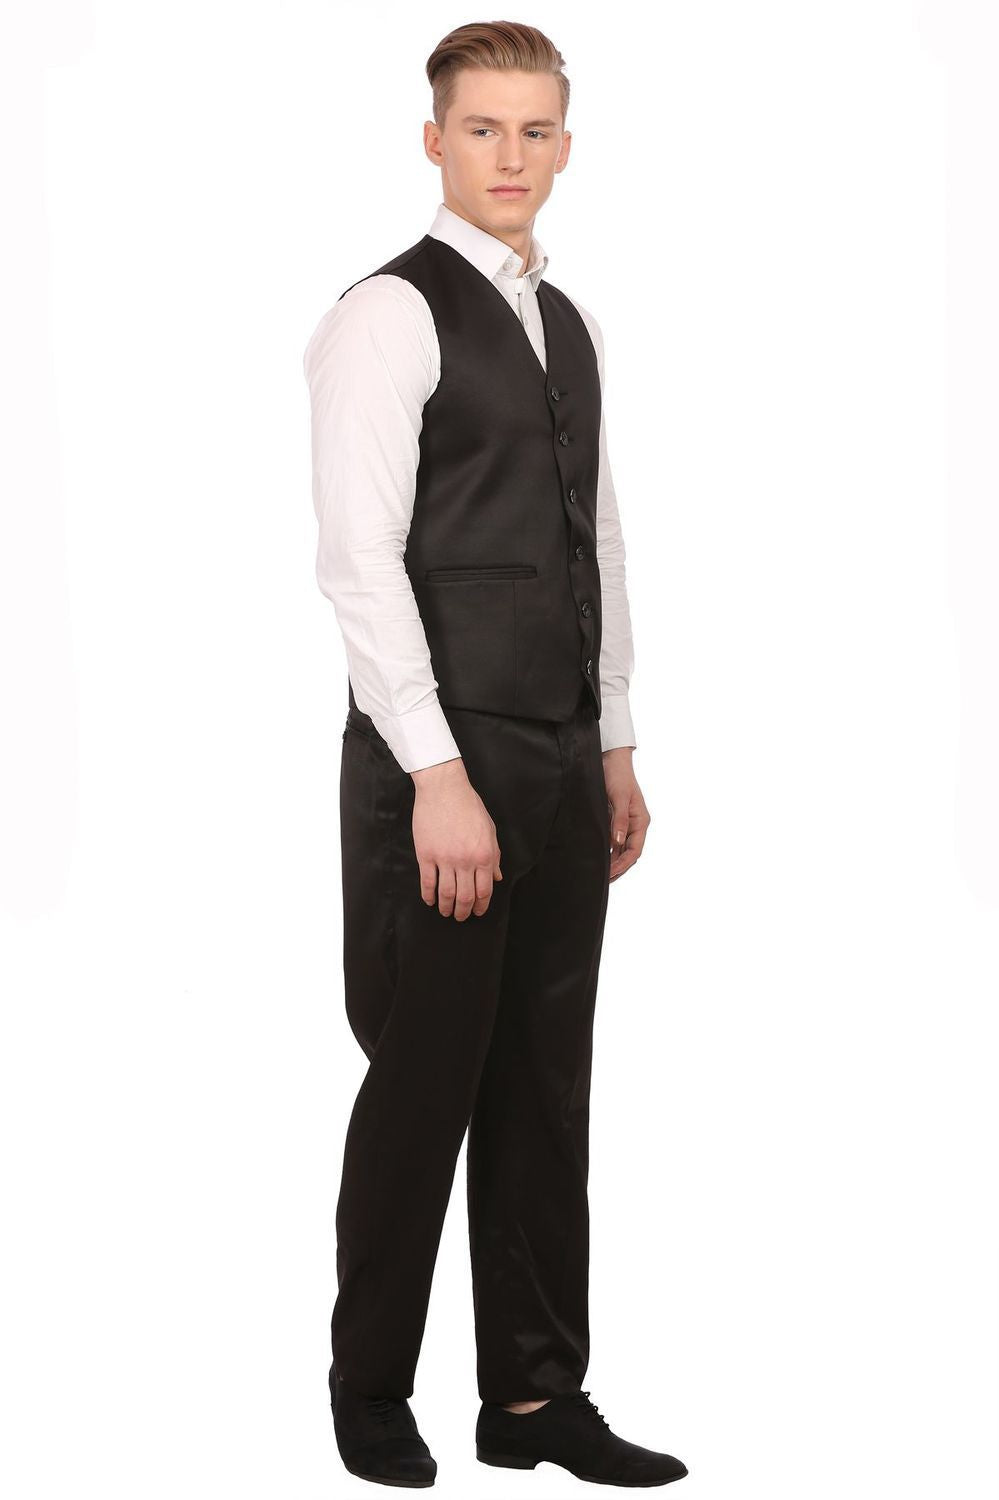 Poly Blend Black Tuxedo Vest and Pant Set